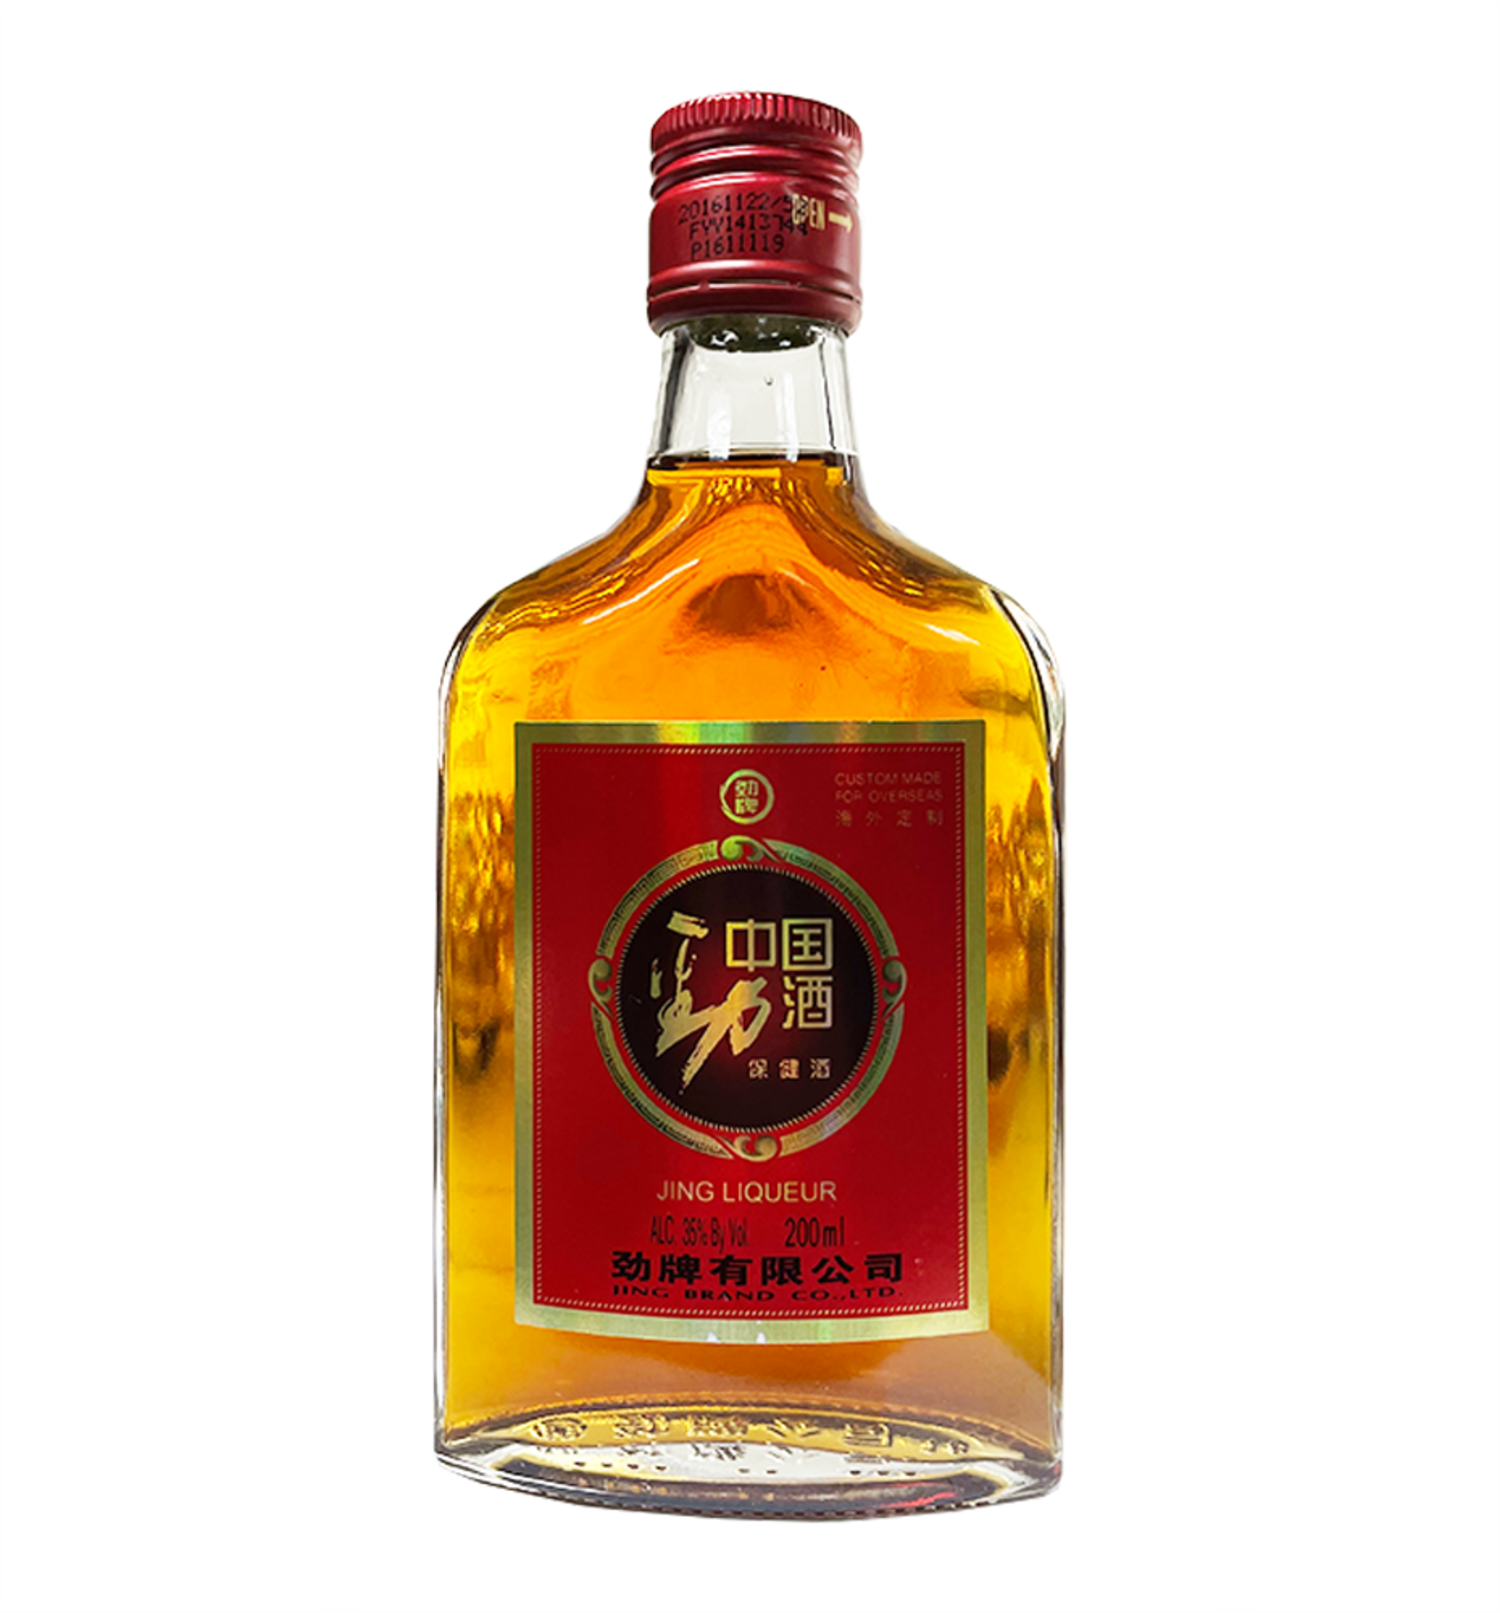 A Dior liquor bottle, Chinese liquor (Lang Jiu, a famous wh…